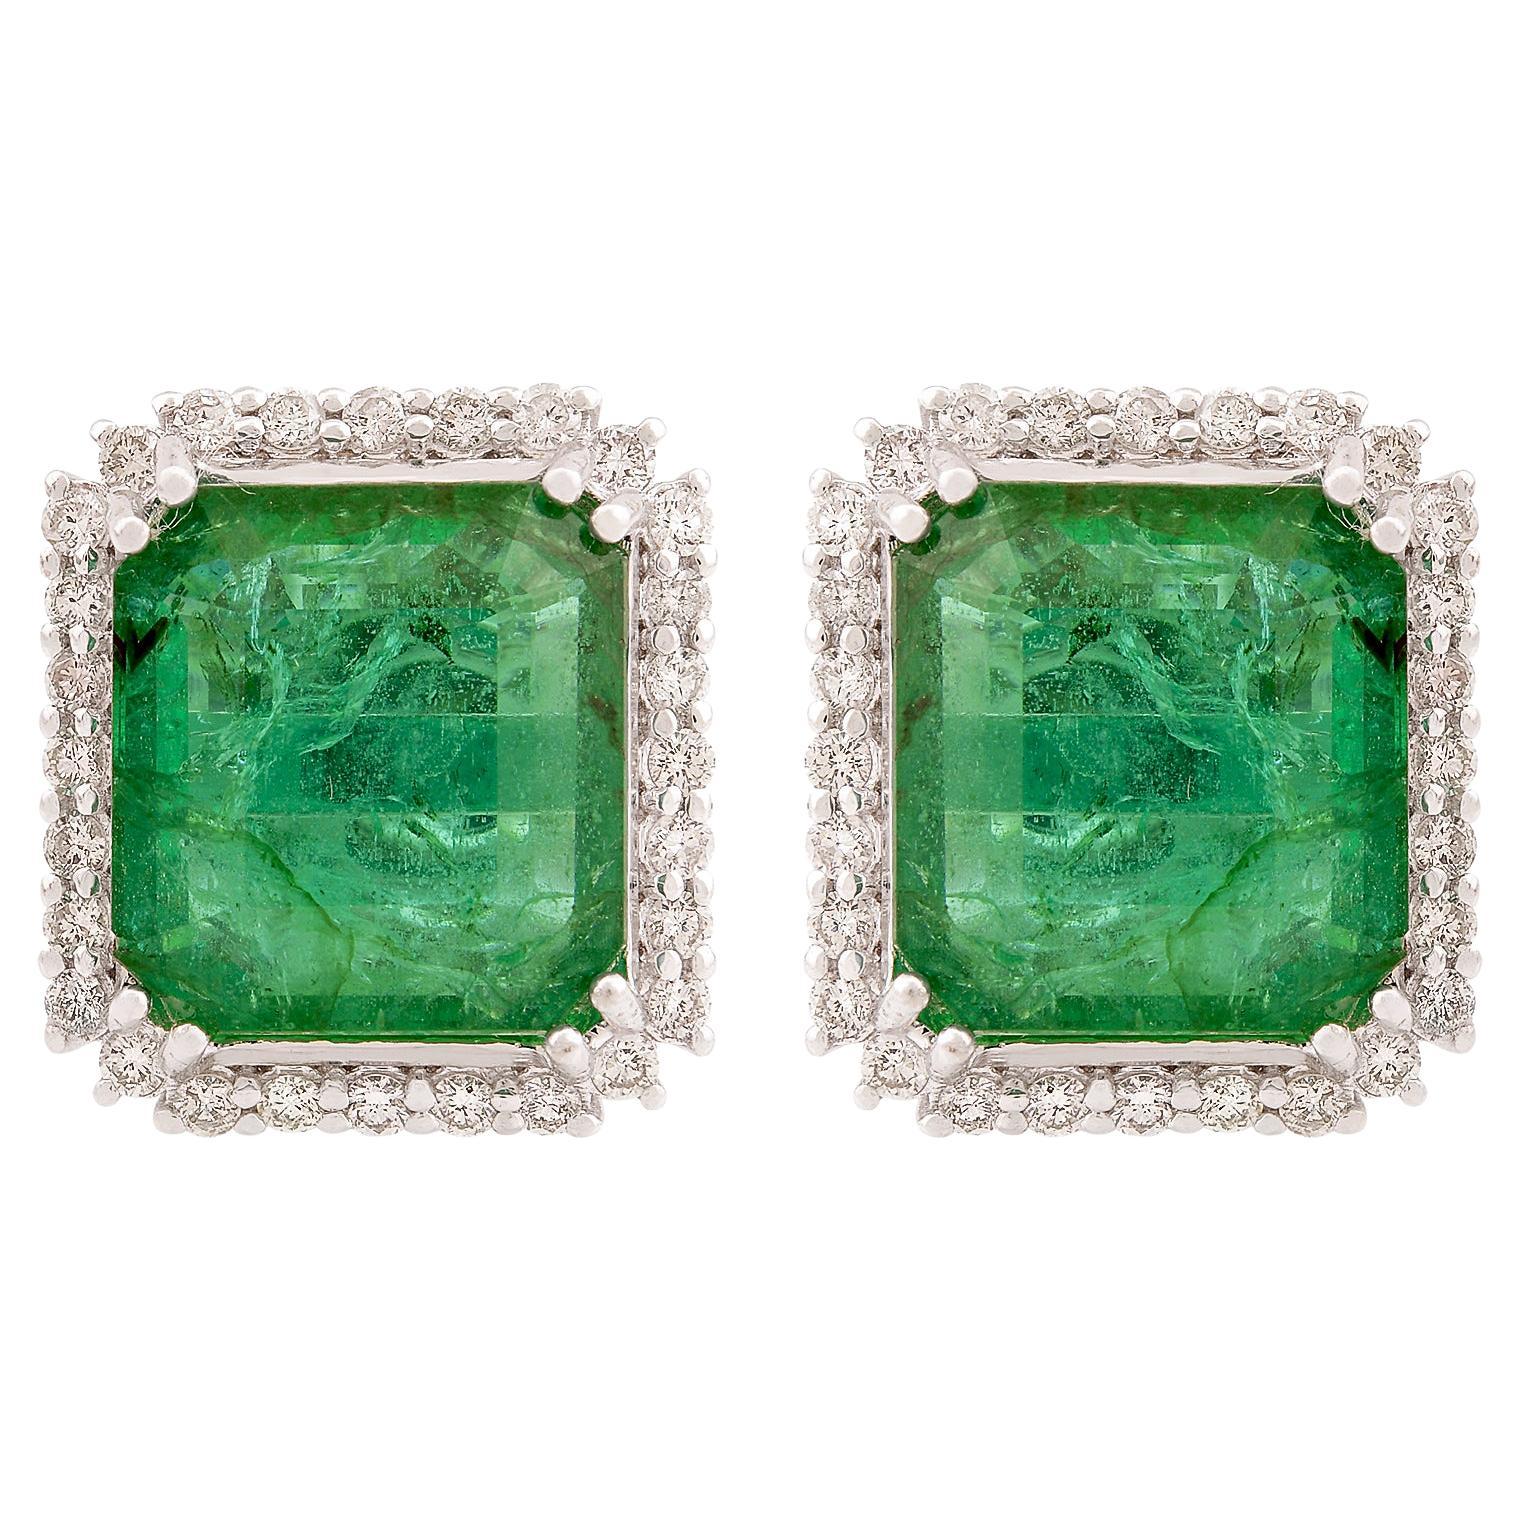 Natural Zambian Emerald Stud Earrings SI/HI Diamond 18 Karat White Gold Jewelry